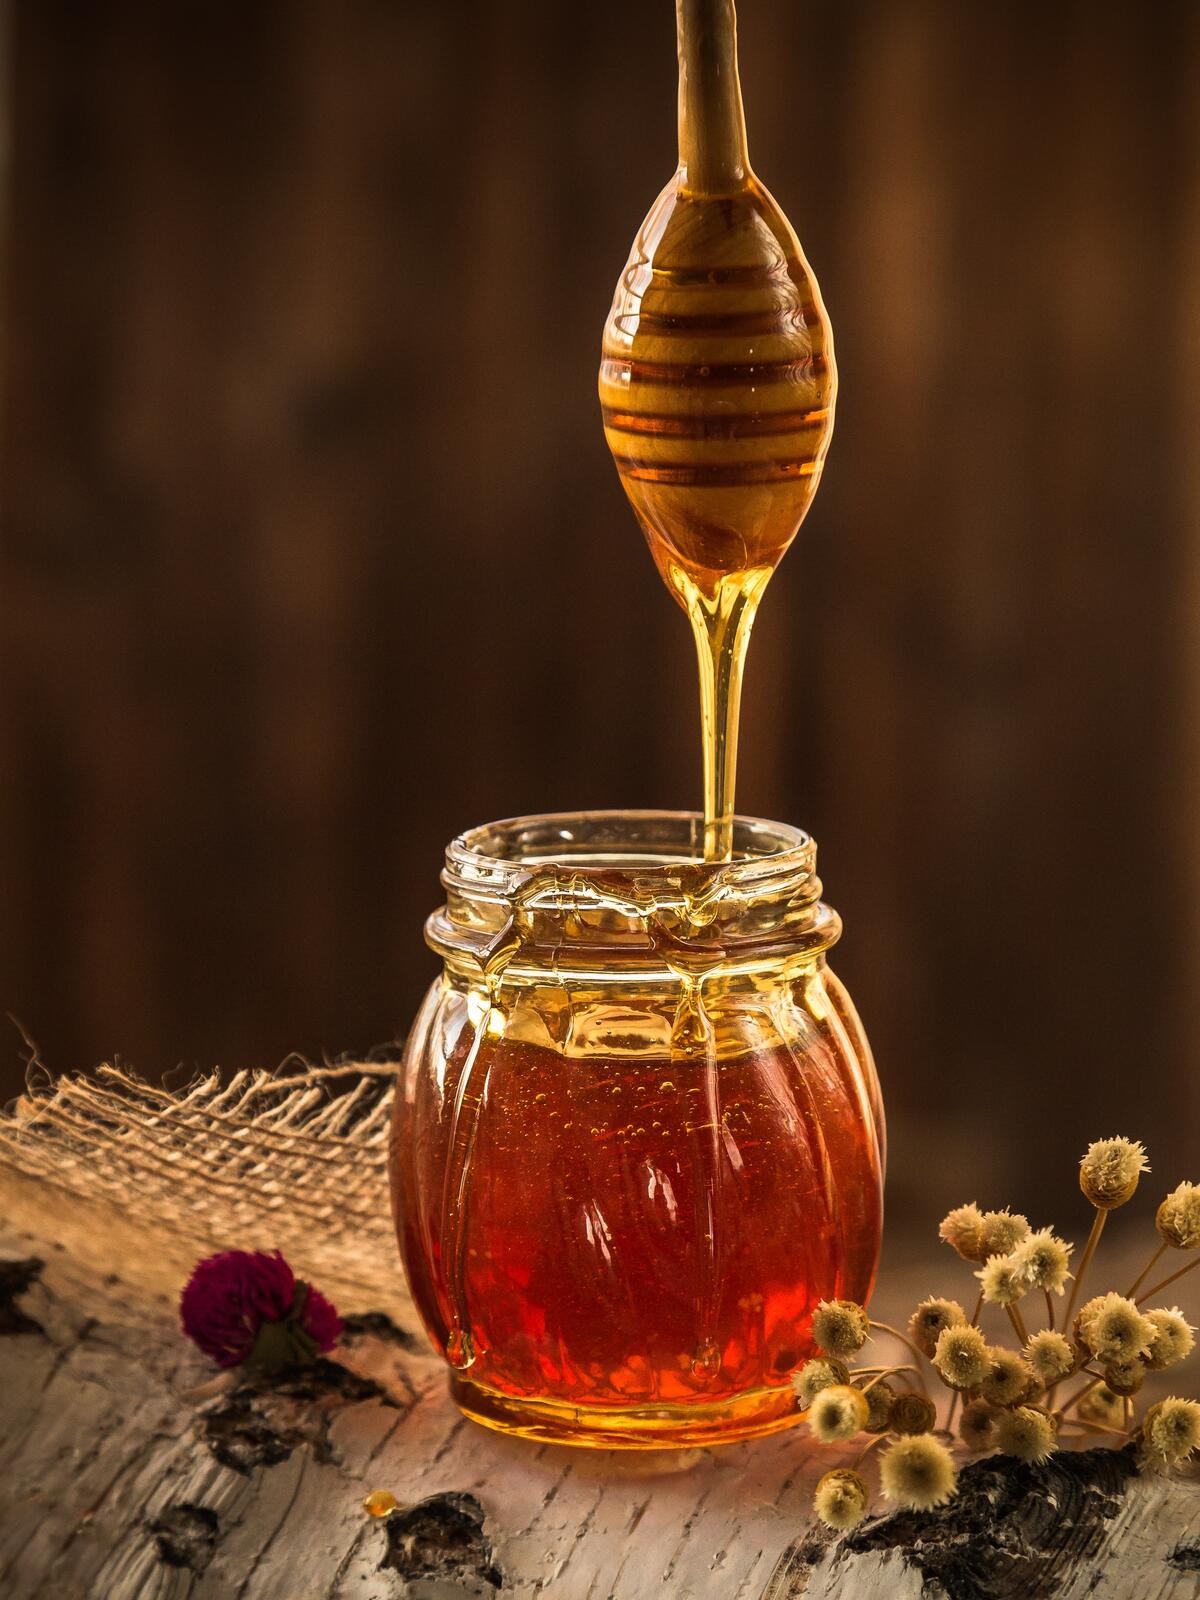 A jar of honey for breakfast